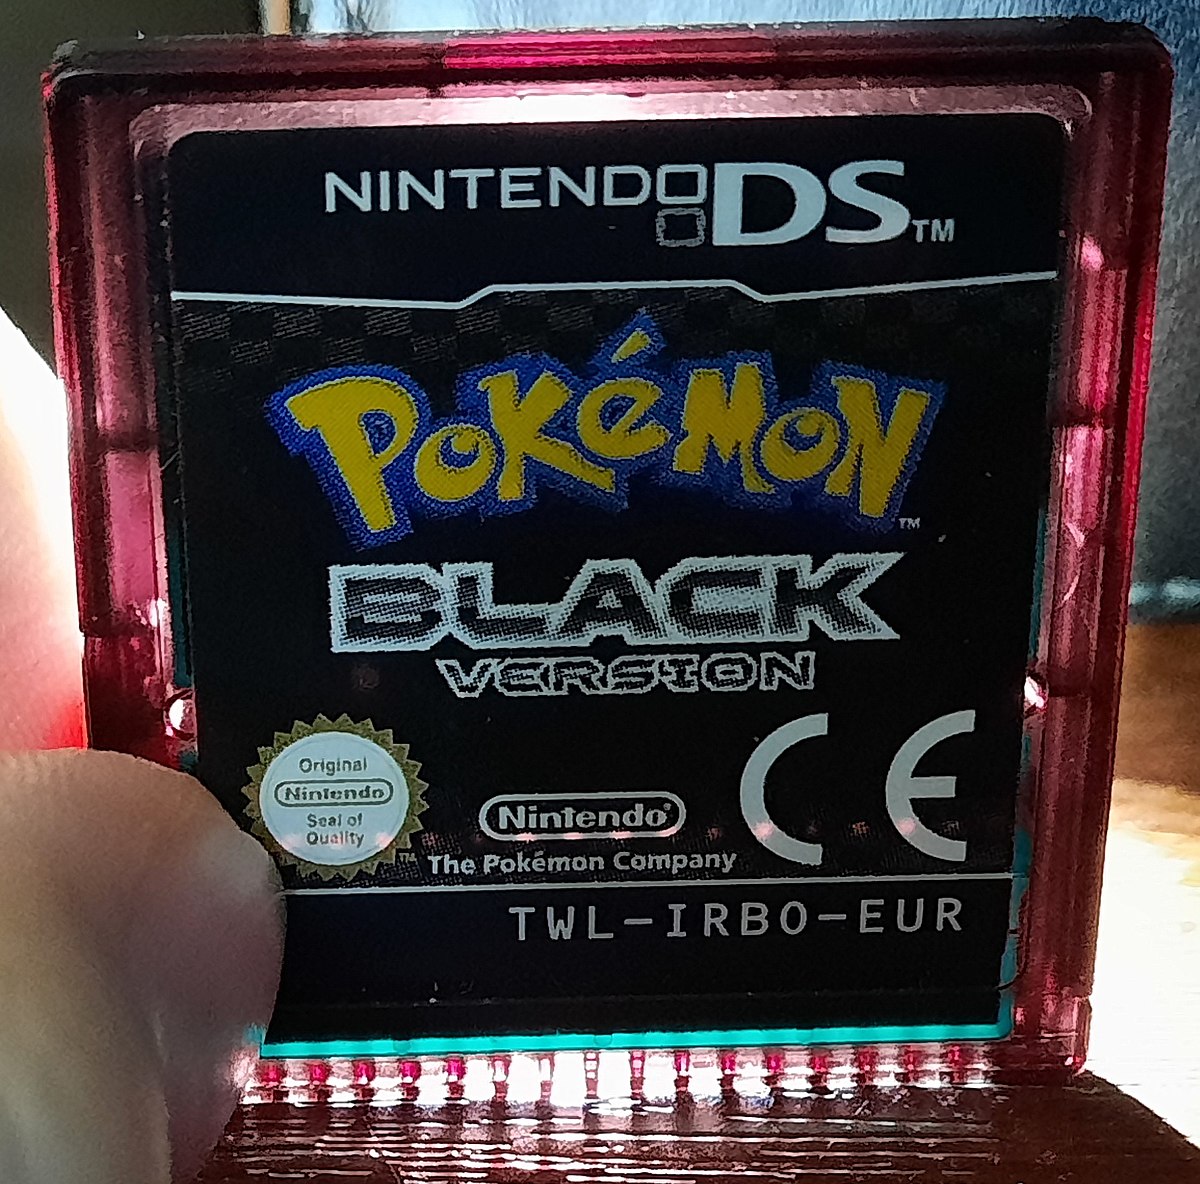 Pokémon - Black Version